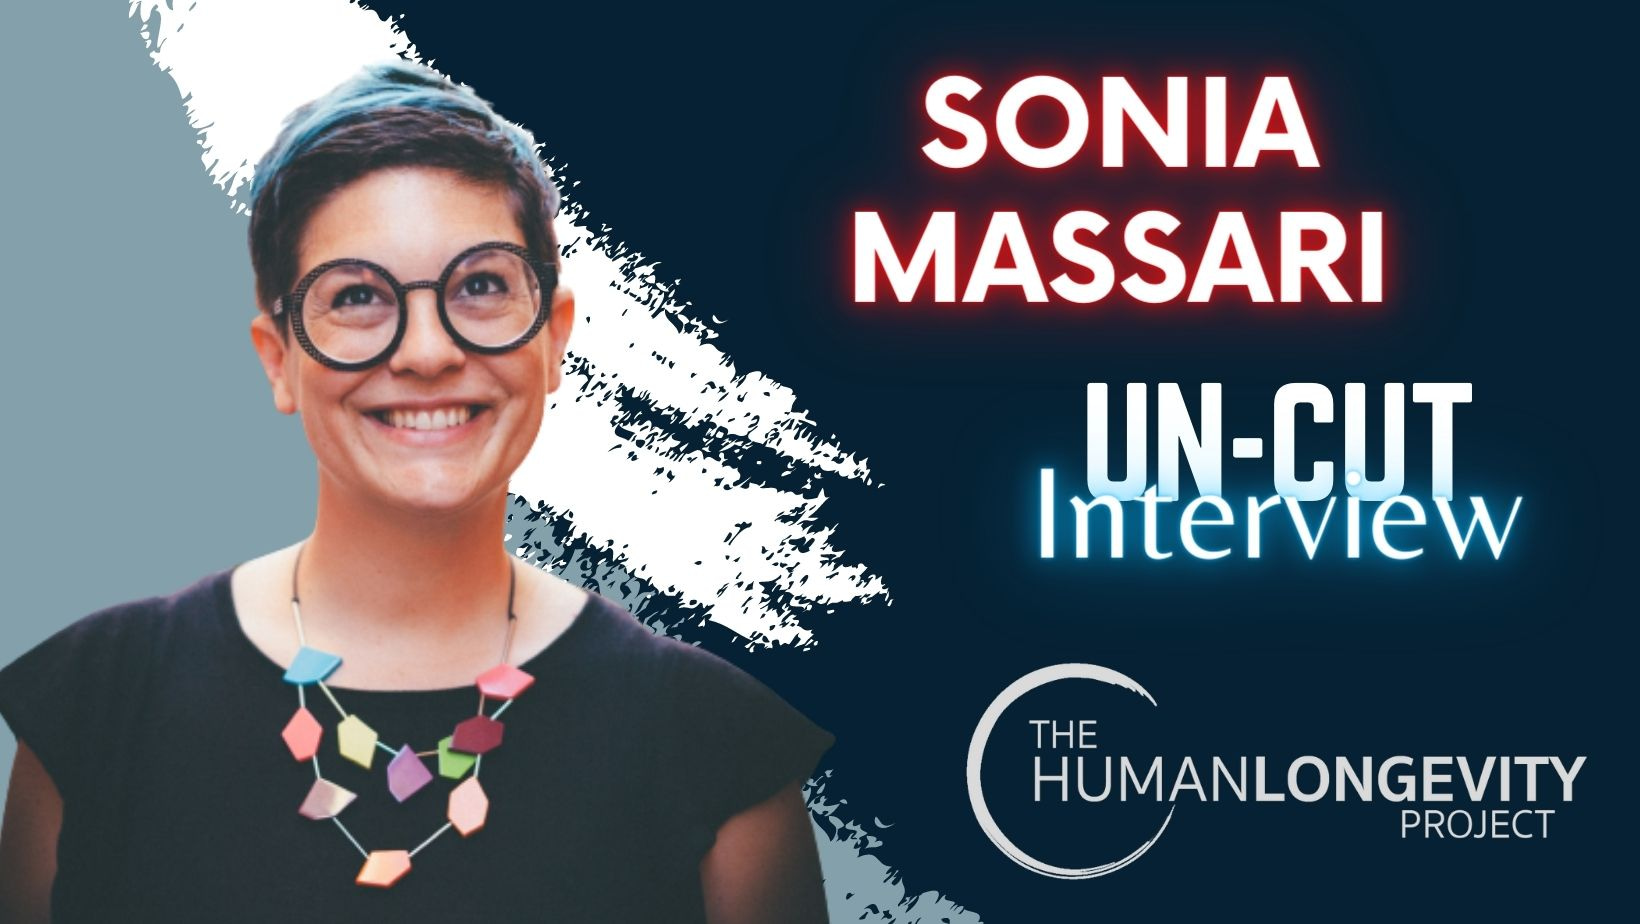 Human Longevity Project Uncut Interview With Dr. Sonia Massari